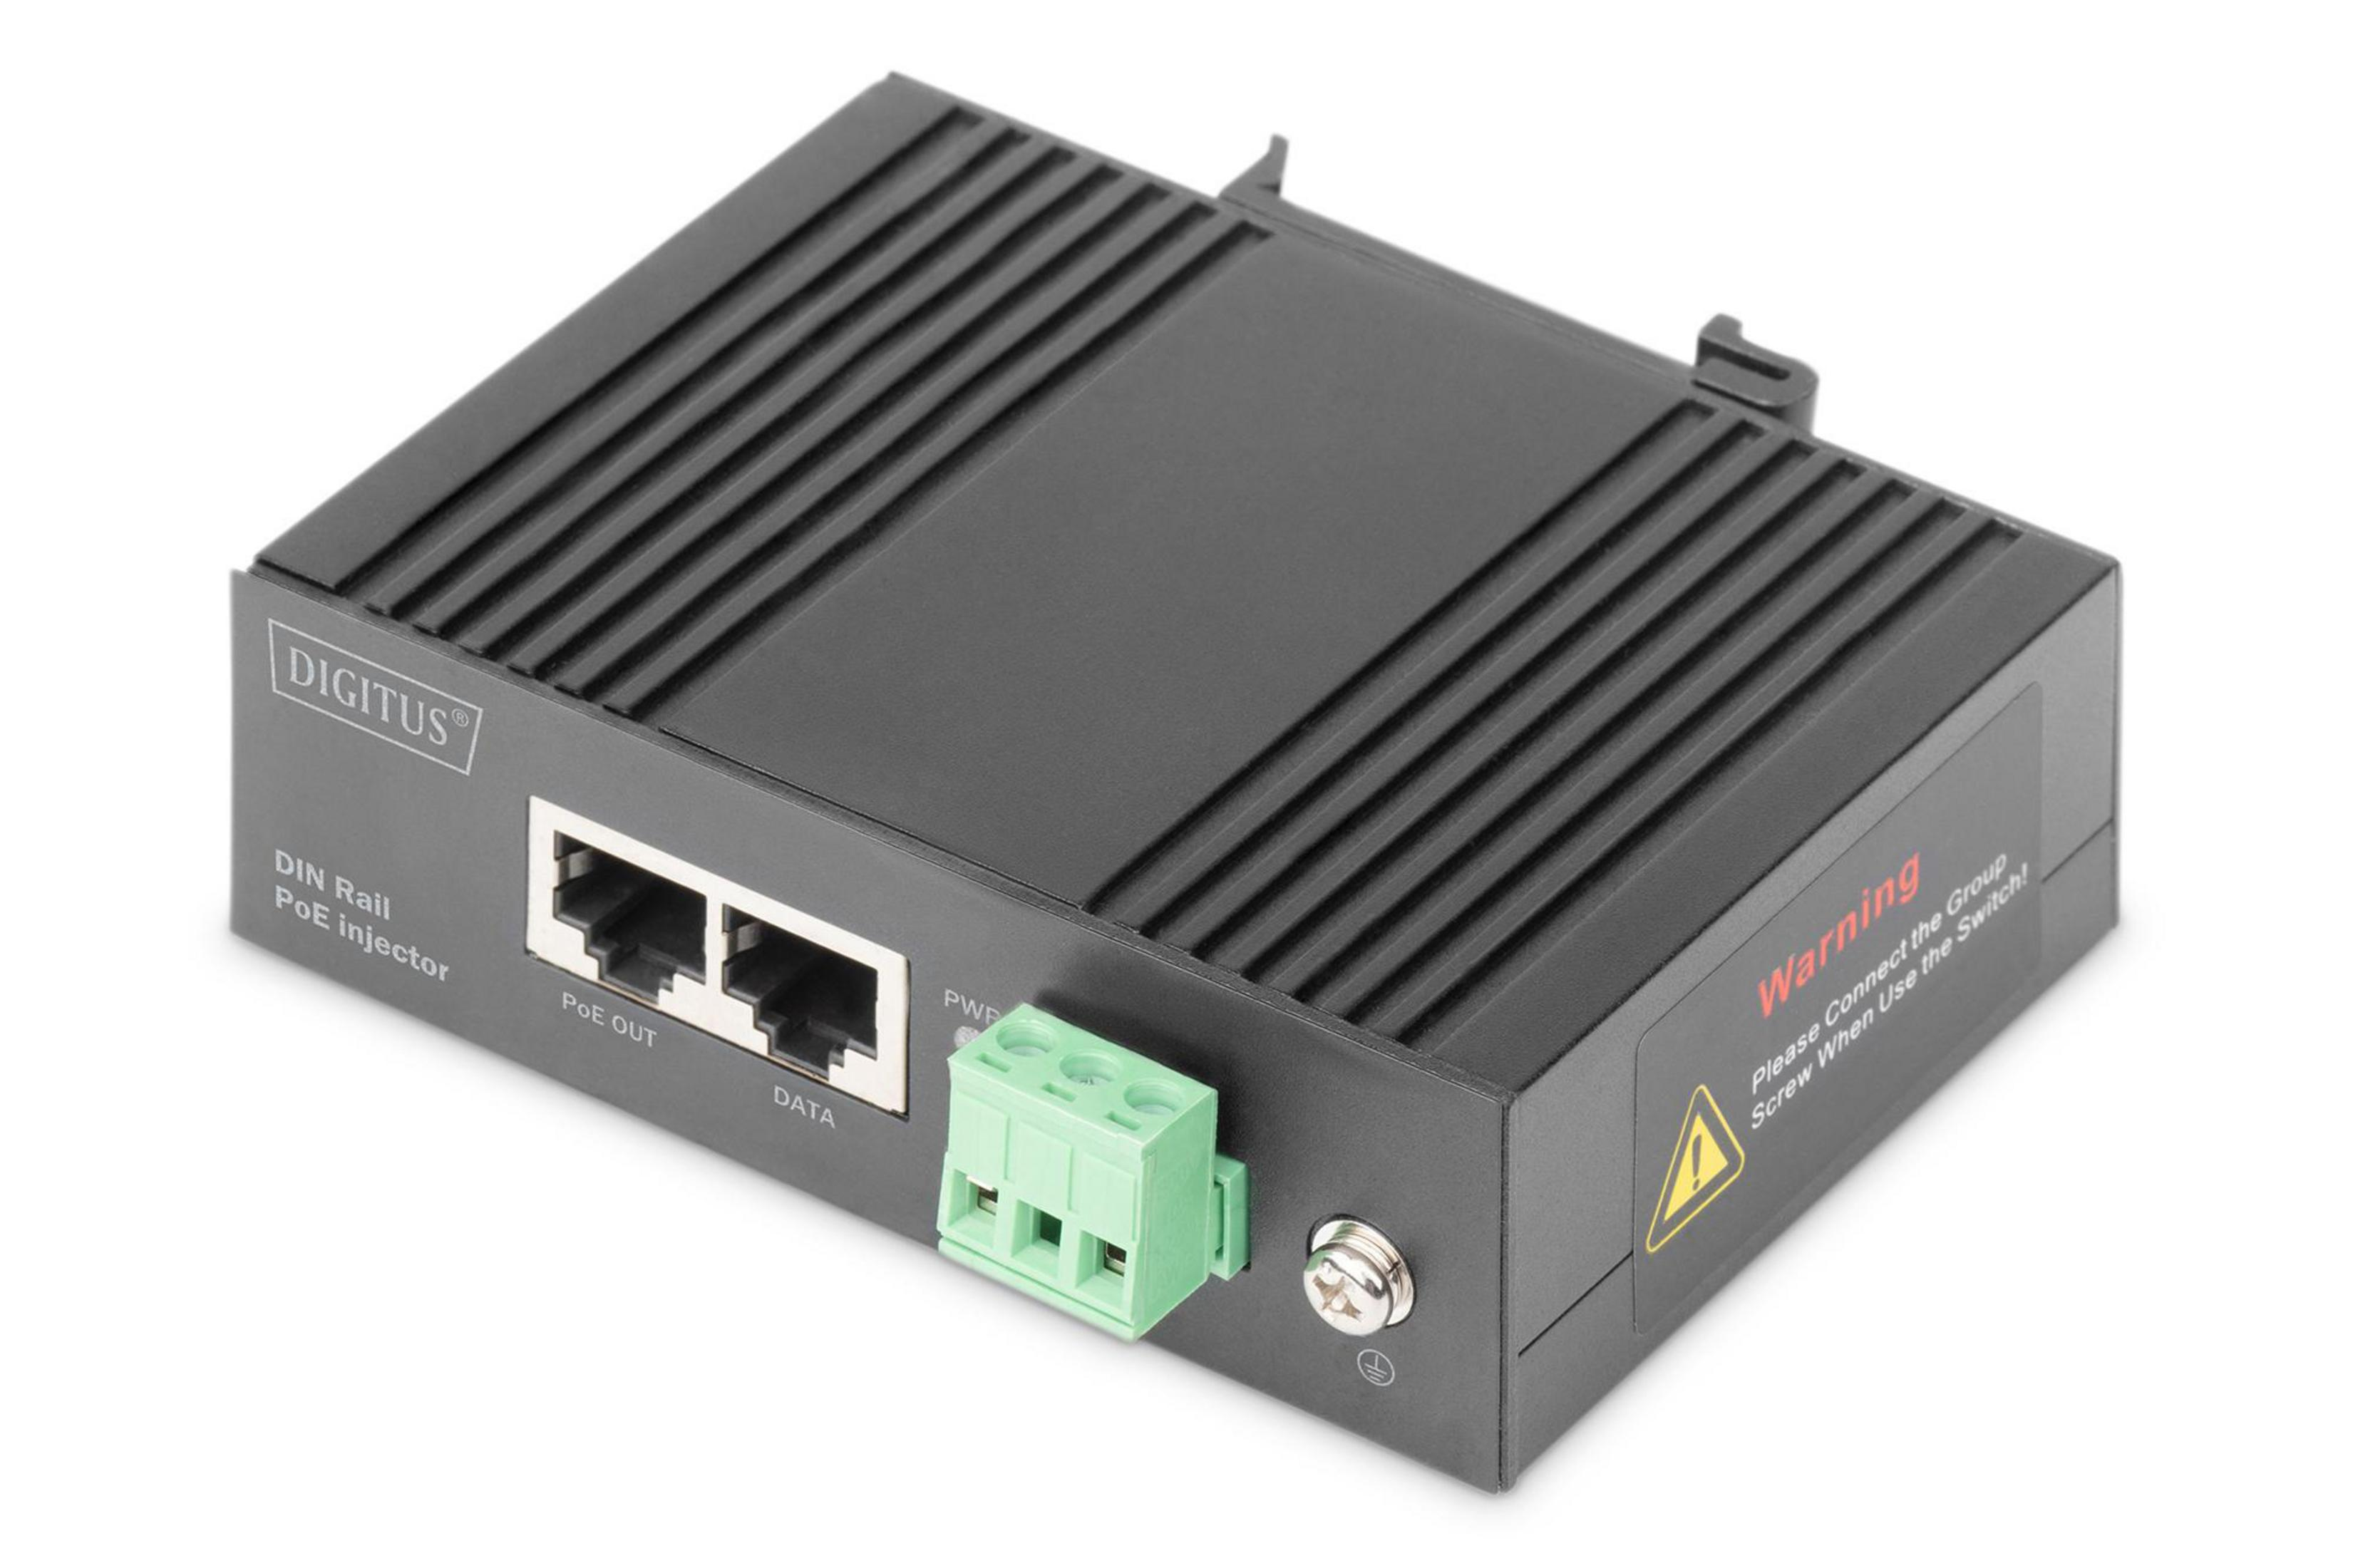 ETHERNET Ethernet Injektor INJEKTOR PoE+ GB W, 30 POE+ Gigabit DIGITUS DN-651114